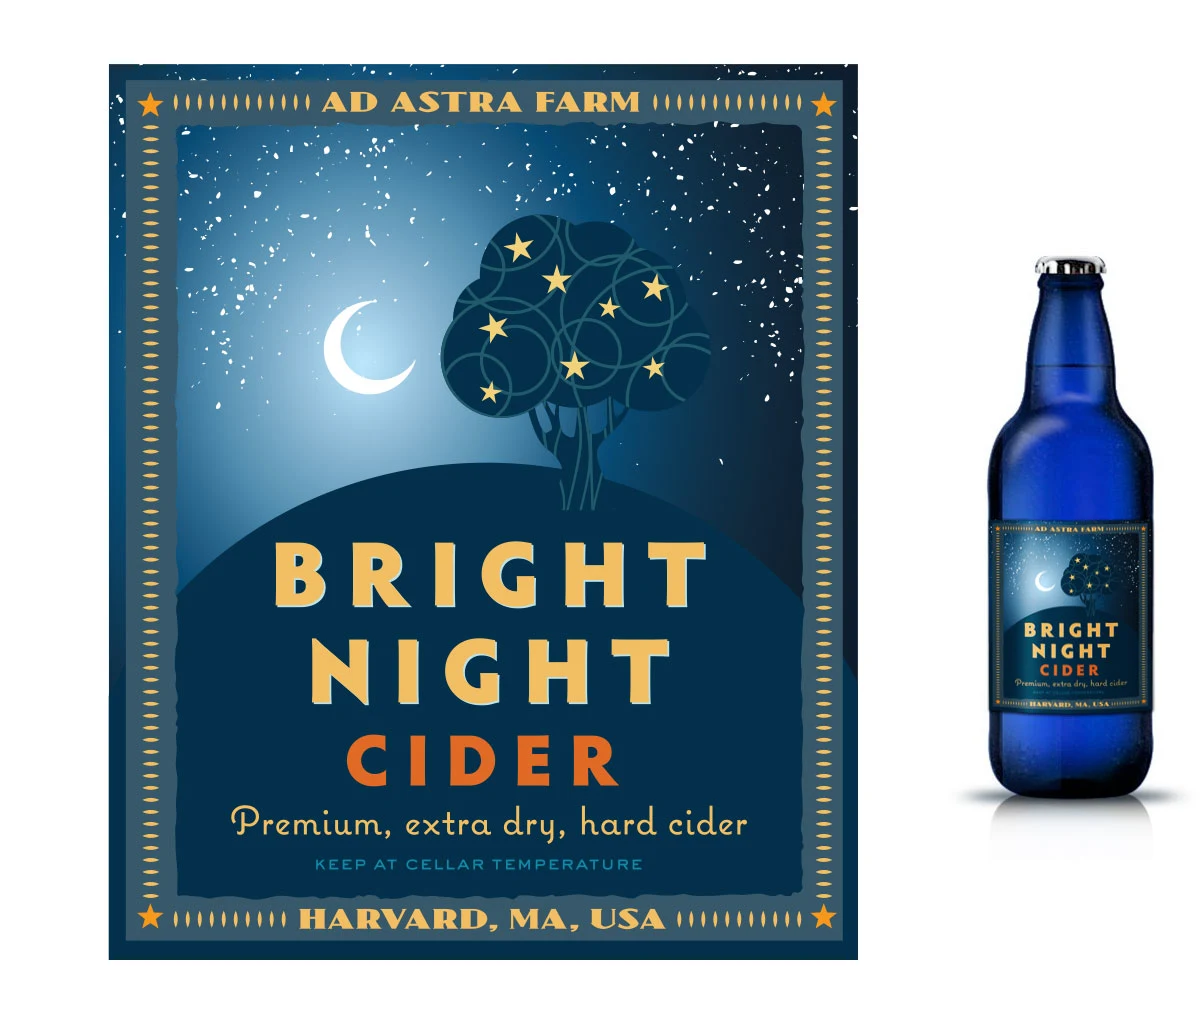 Bright Night Cider label